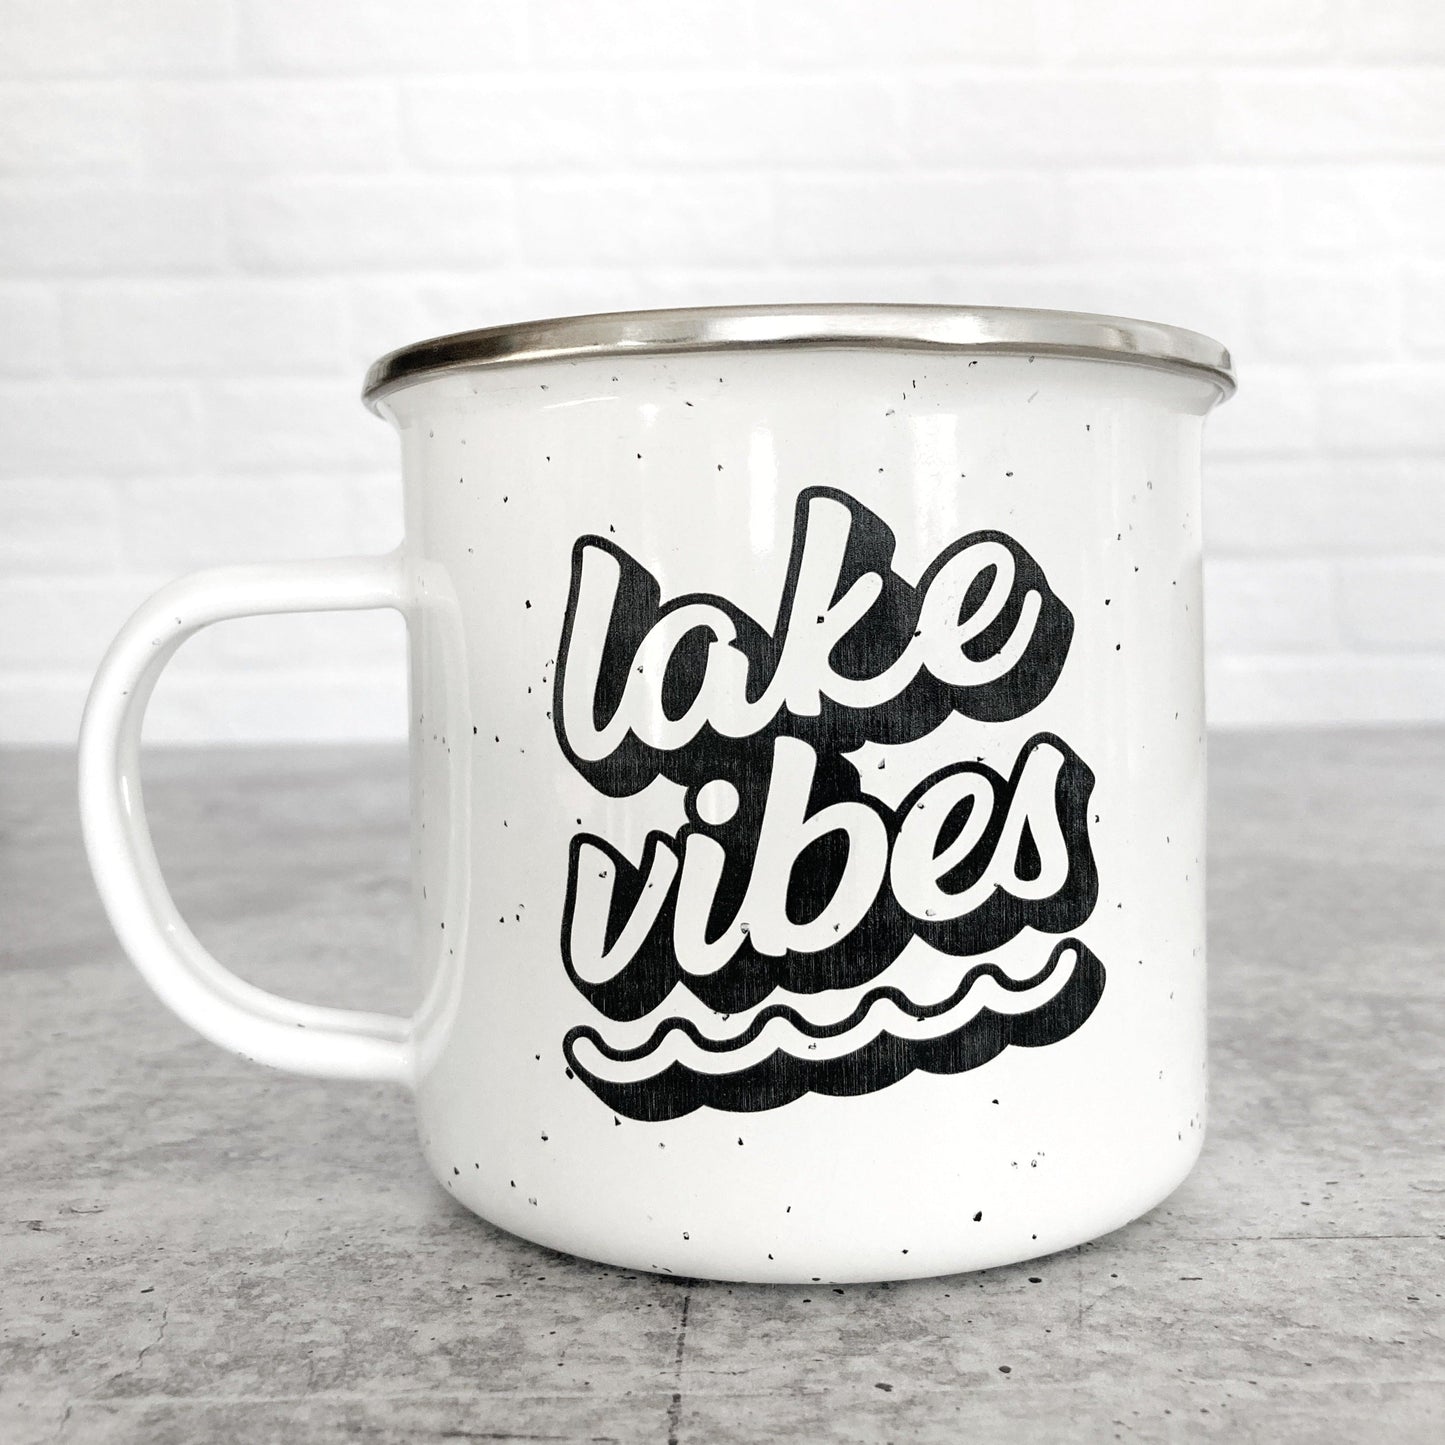 Lake Vibes design on a white enamel mug